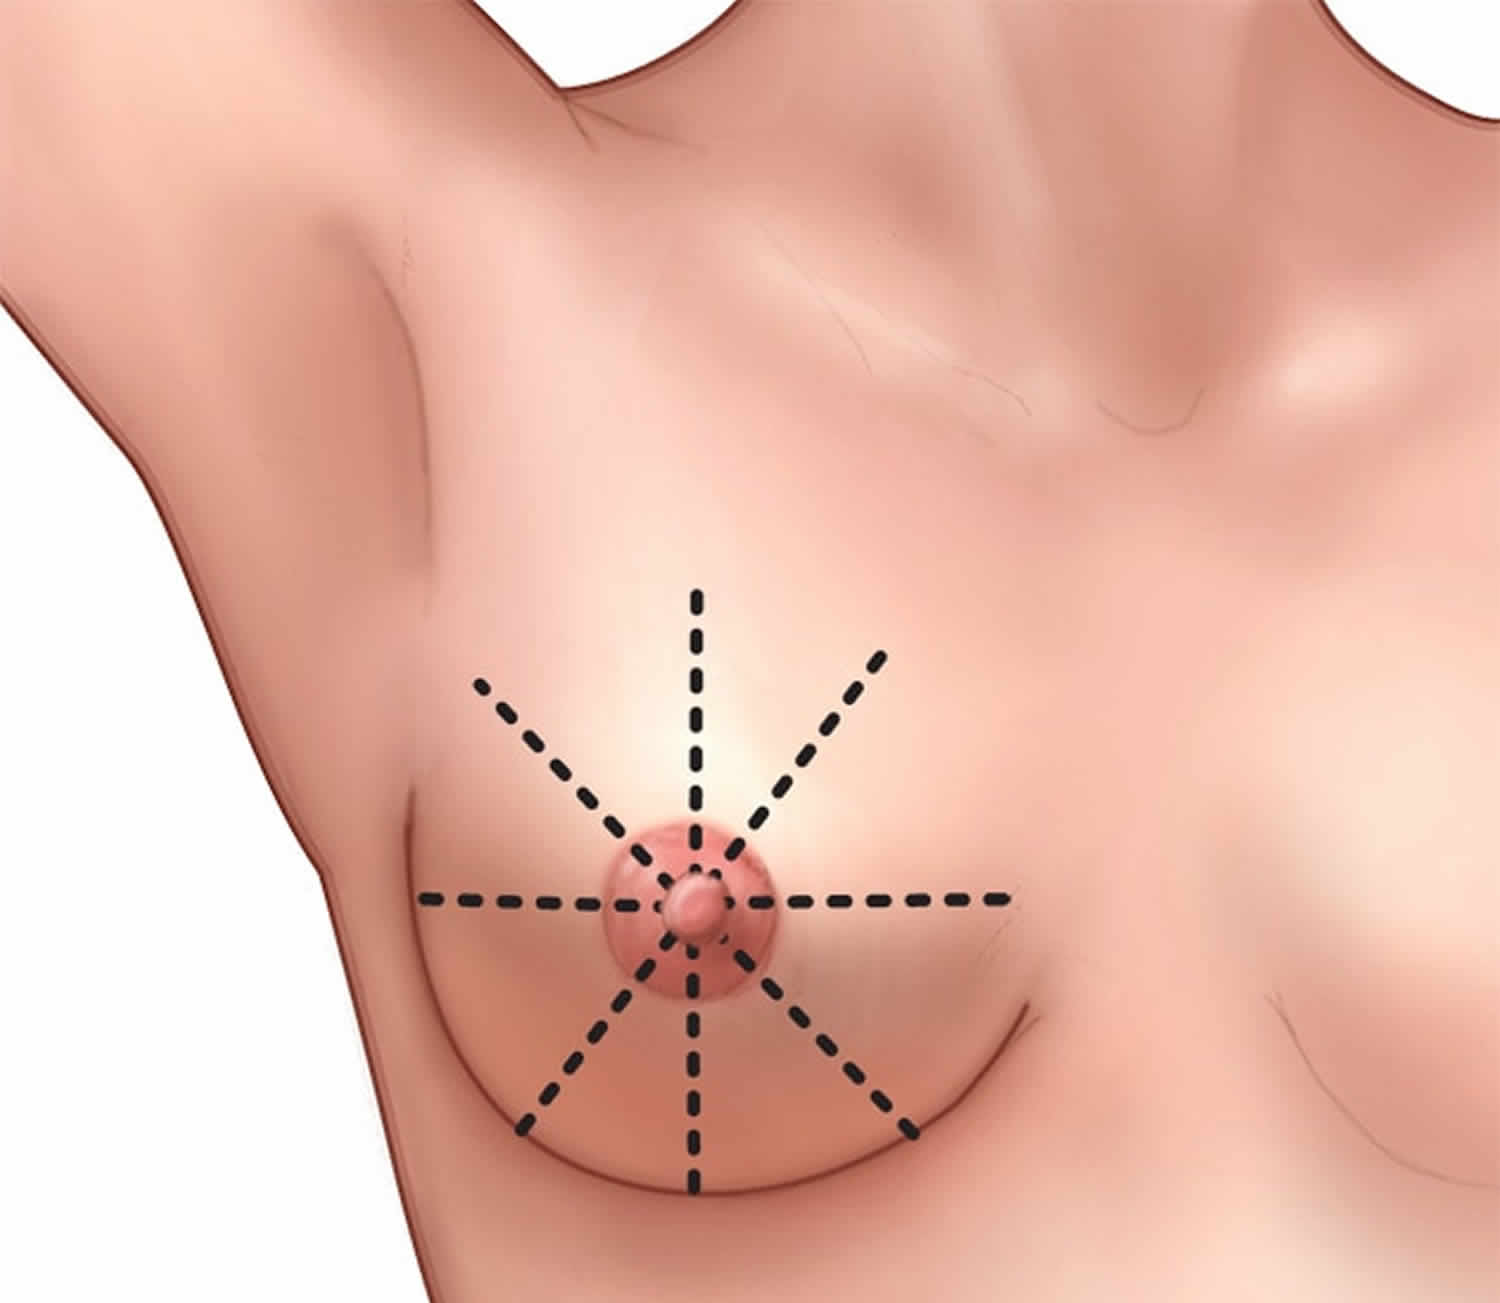 Self breast exam pattern